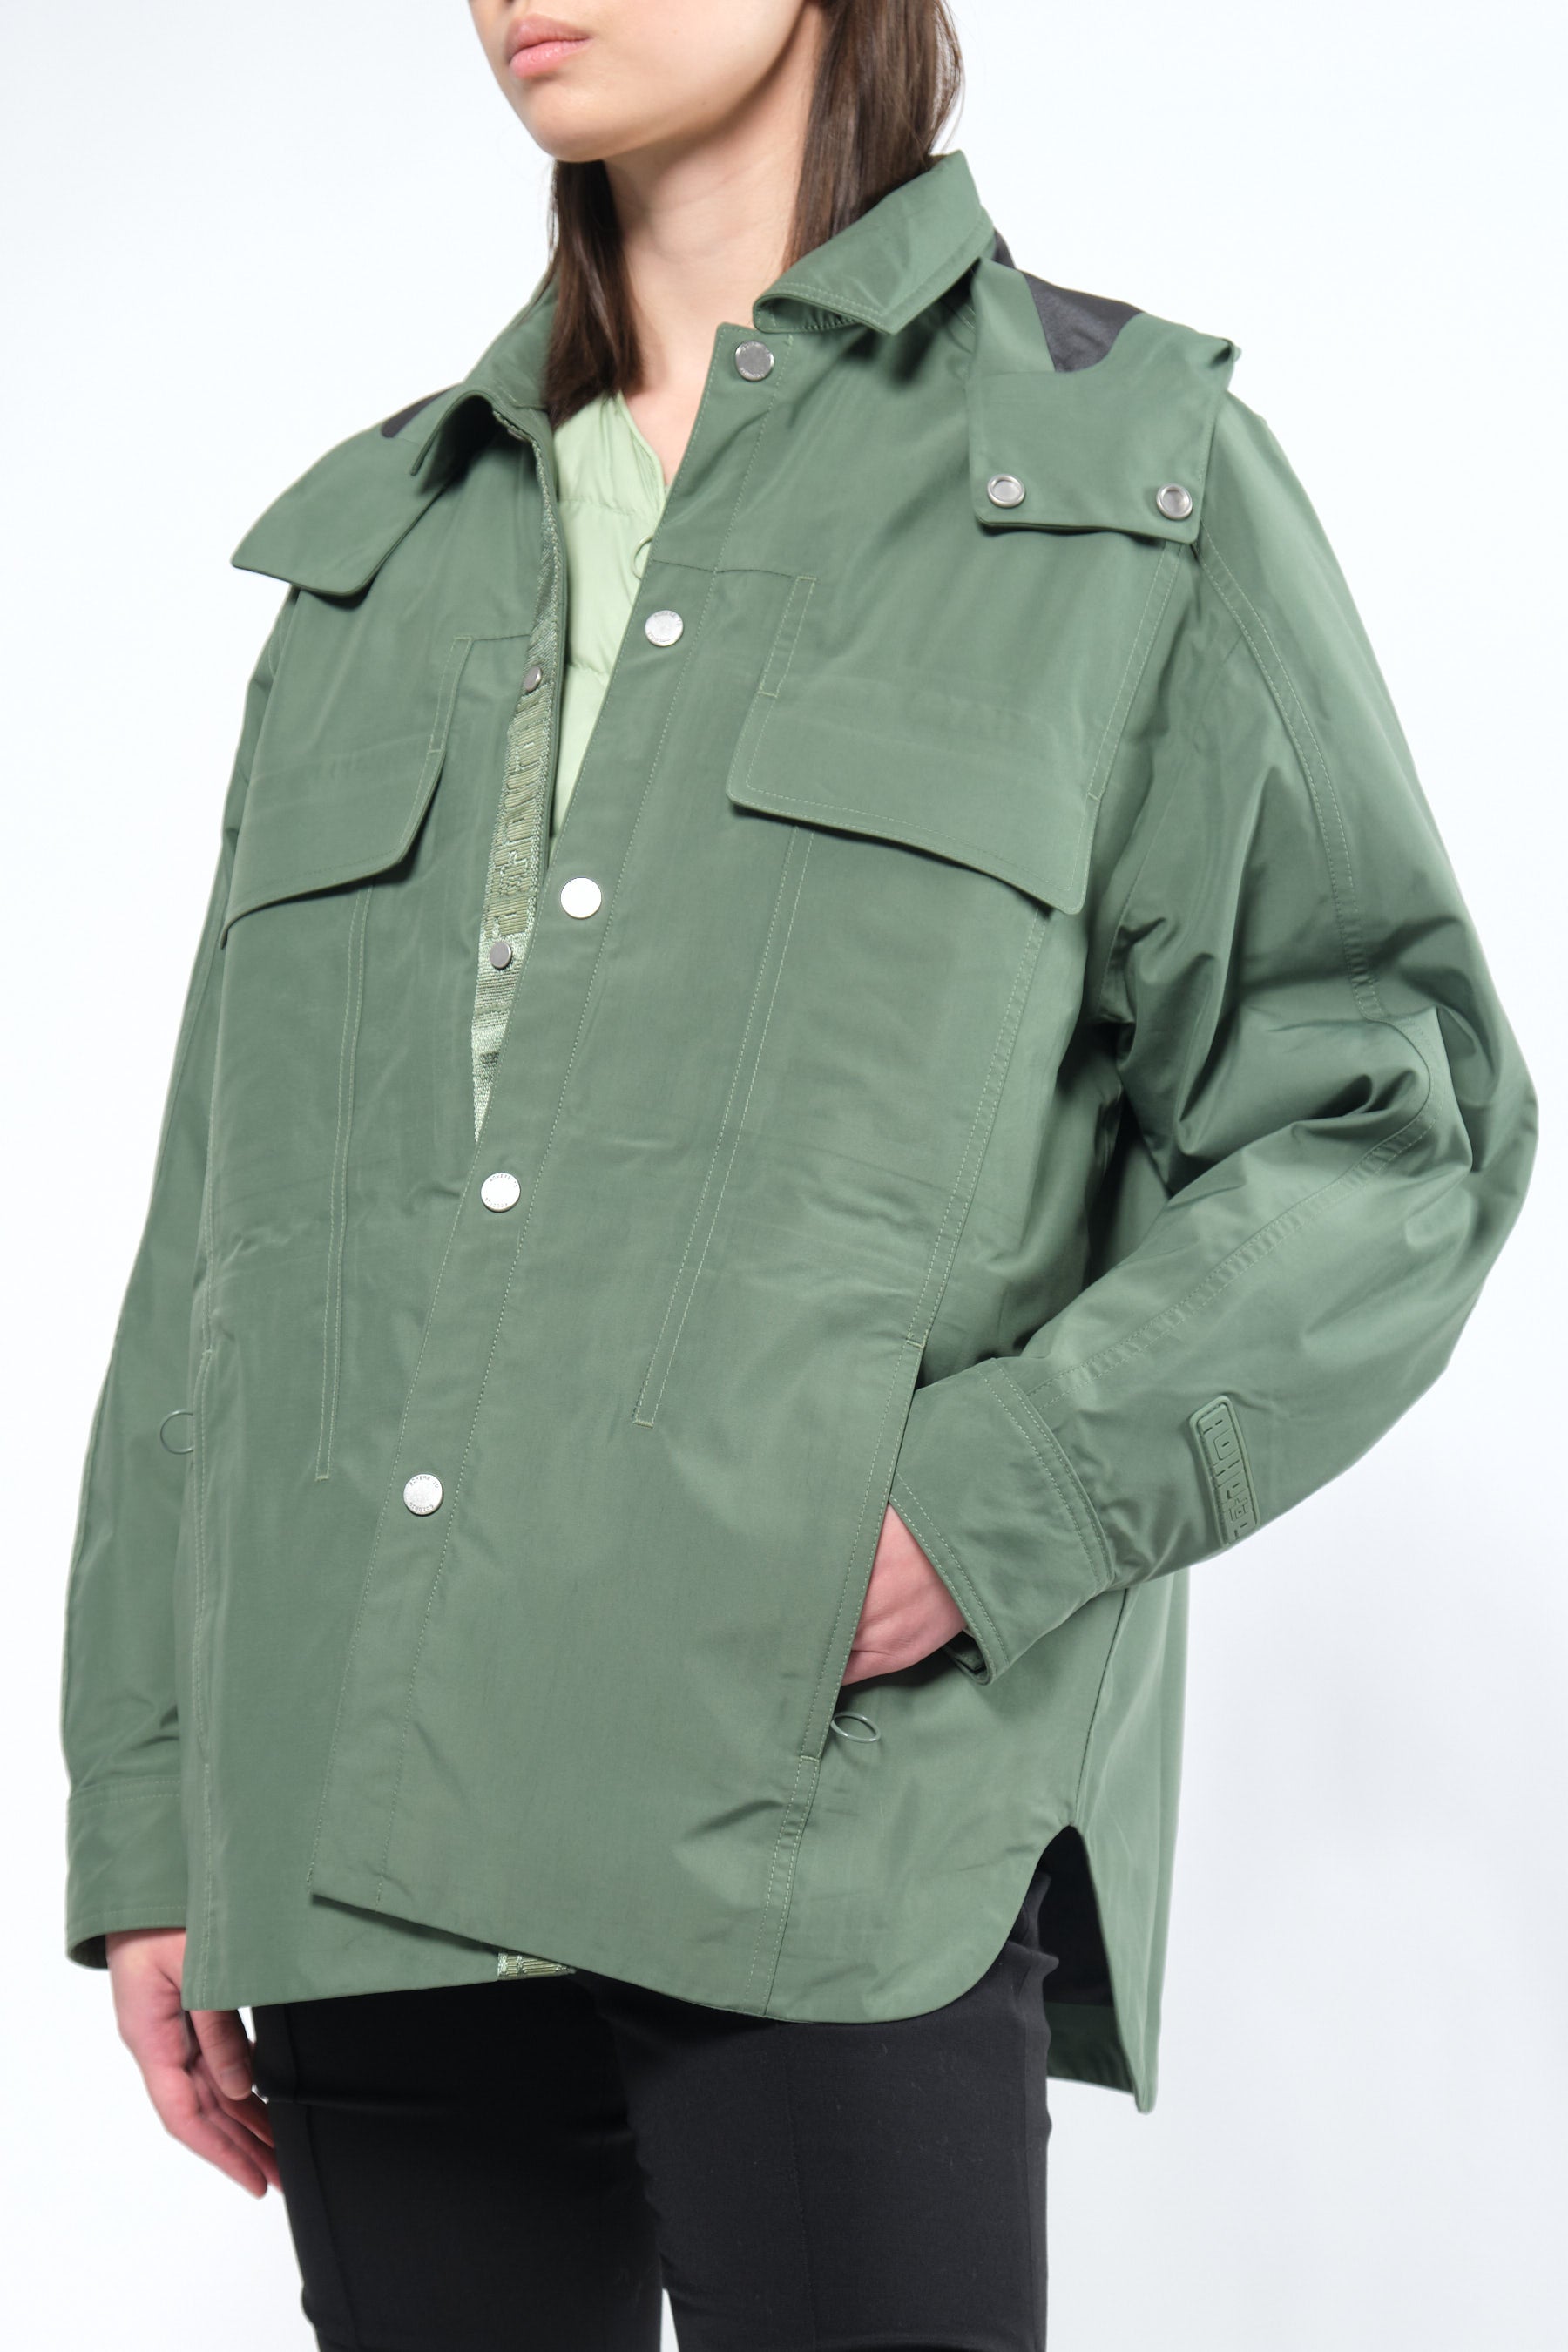  3L Green Waterproof Rain Jacket with Hood - Adhere To  - 9